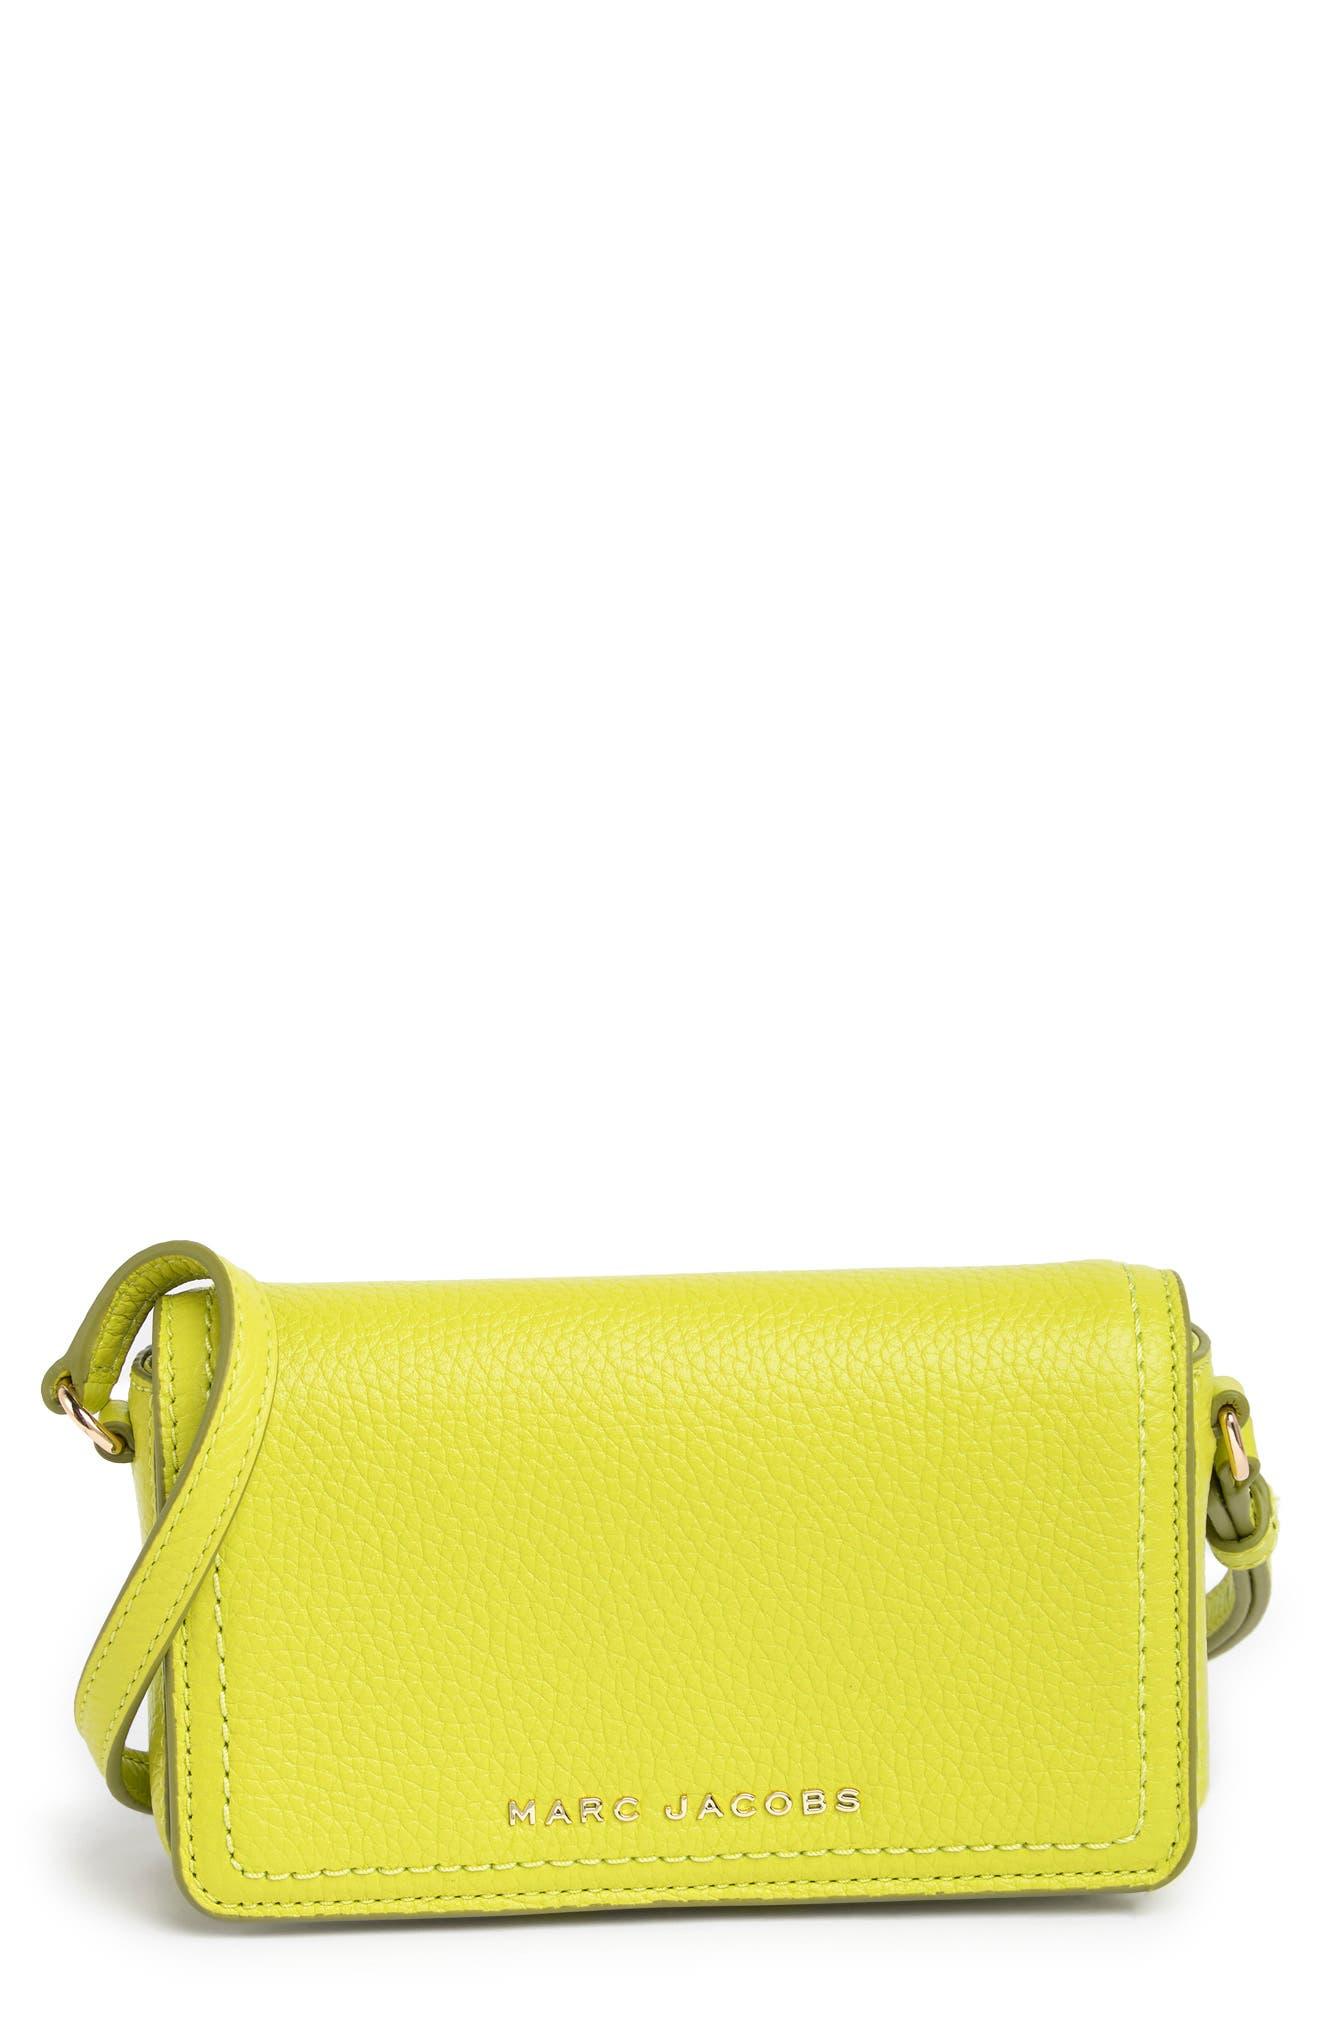 Nordstrom Rack Marc Jacob's sale: Get the popular brand's handbags